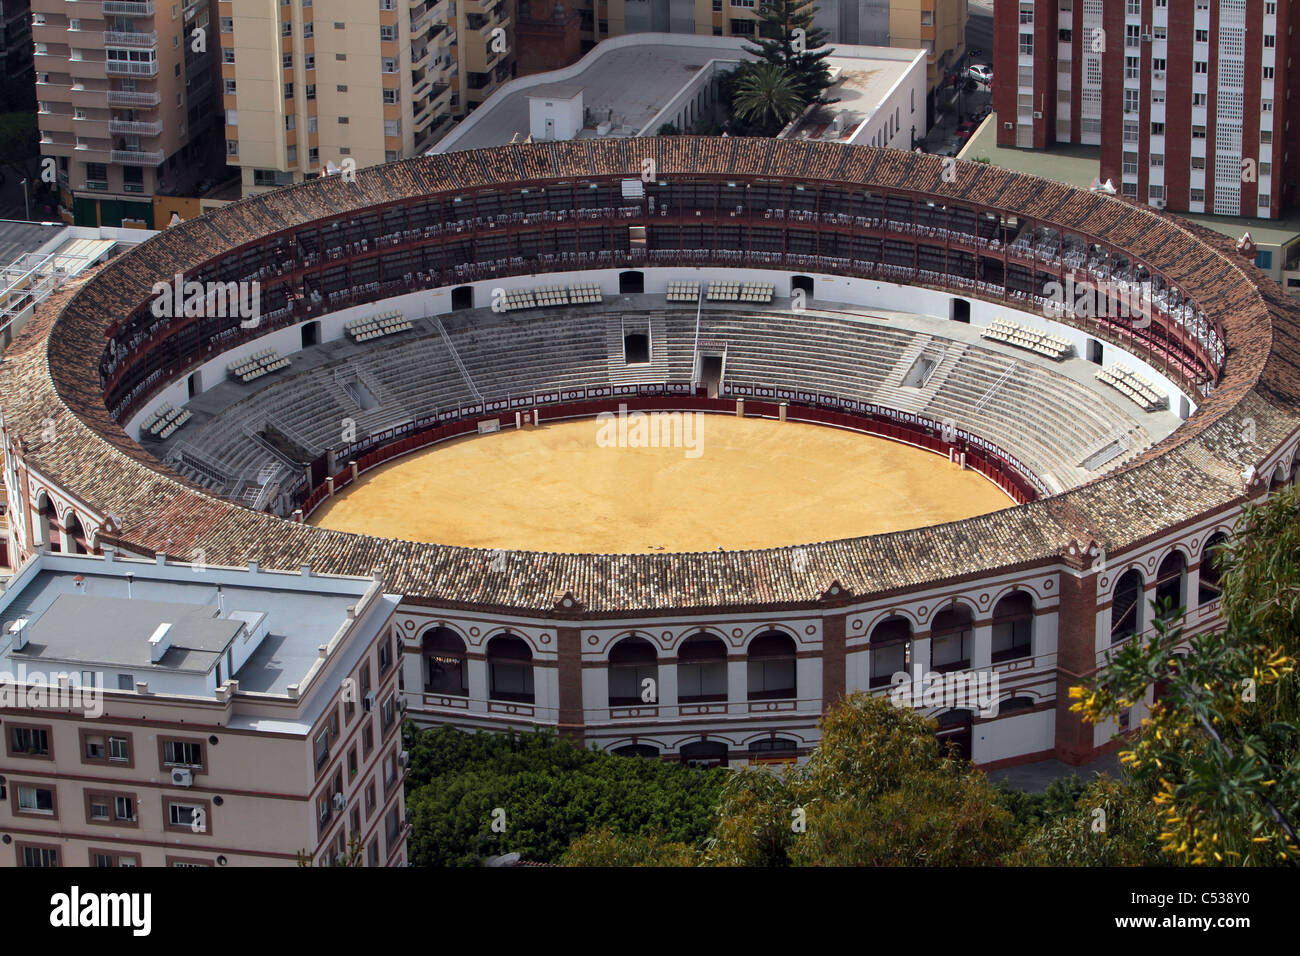 Toro Malaga Spain Immagini e Fotos Stock - Alamy